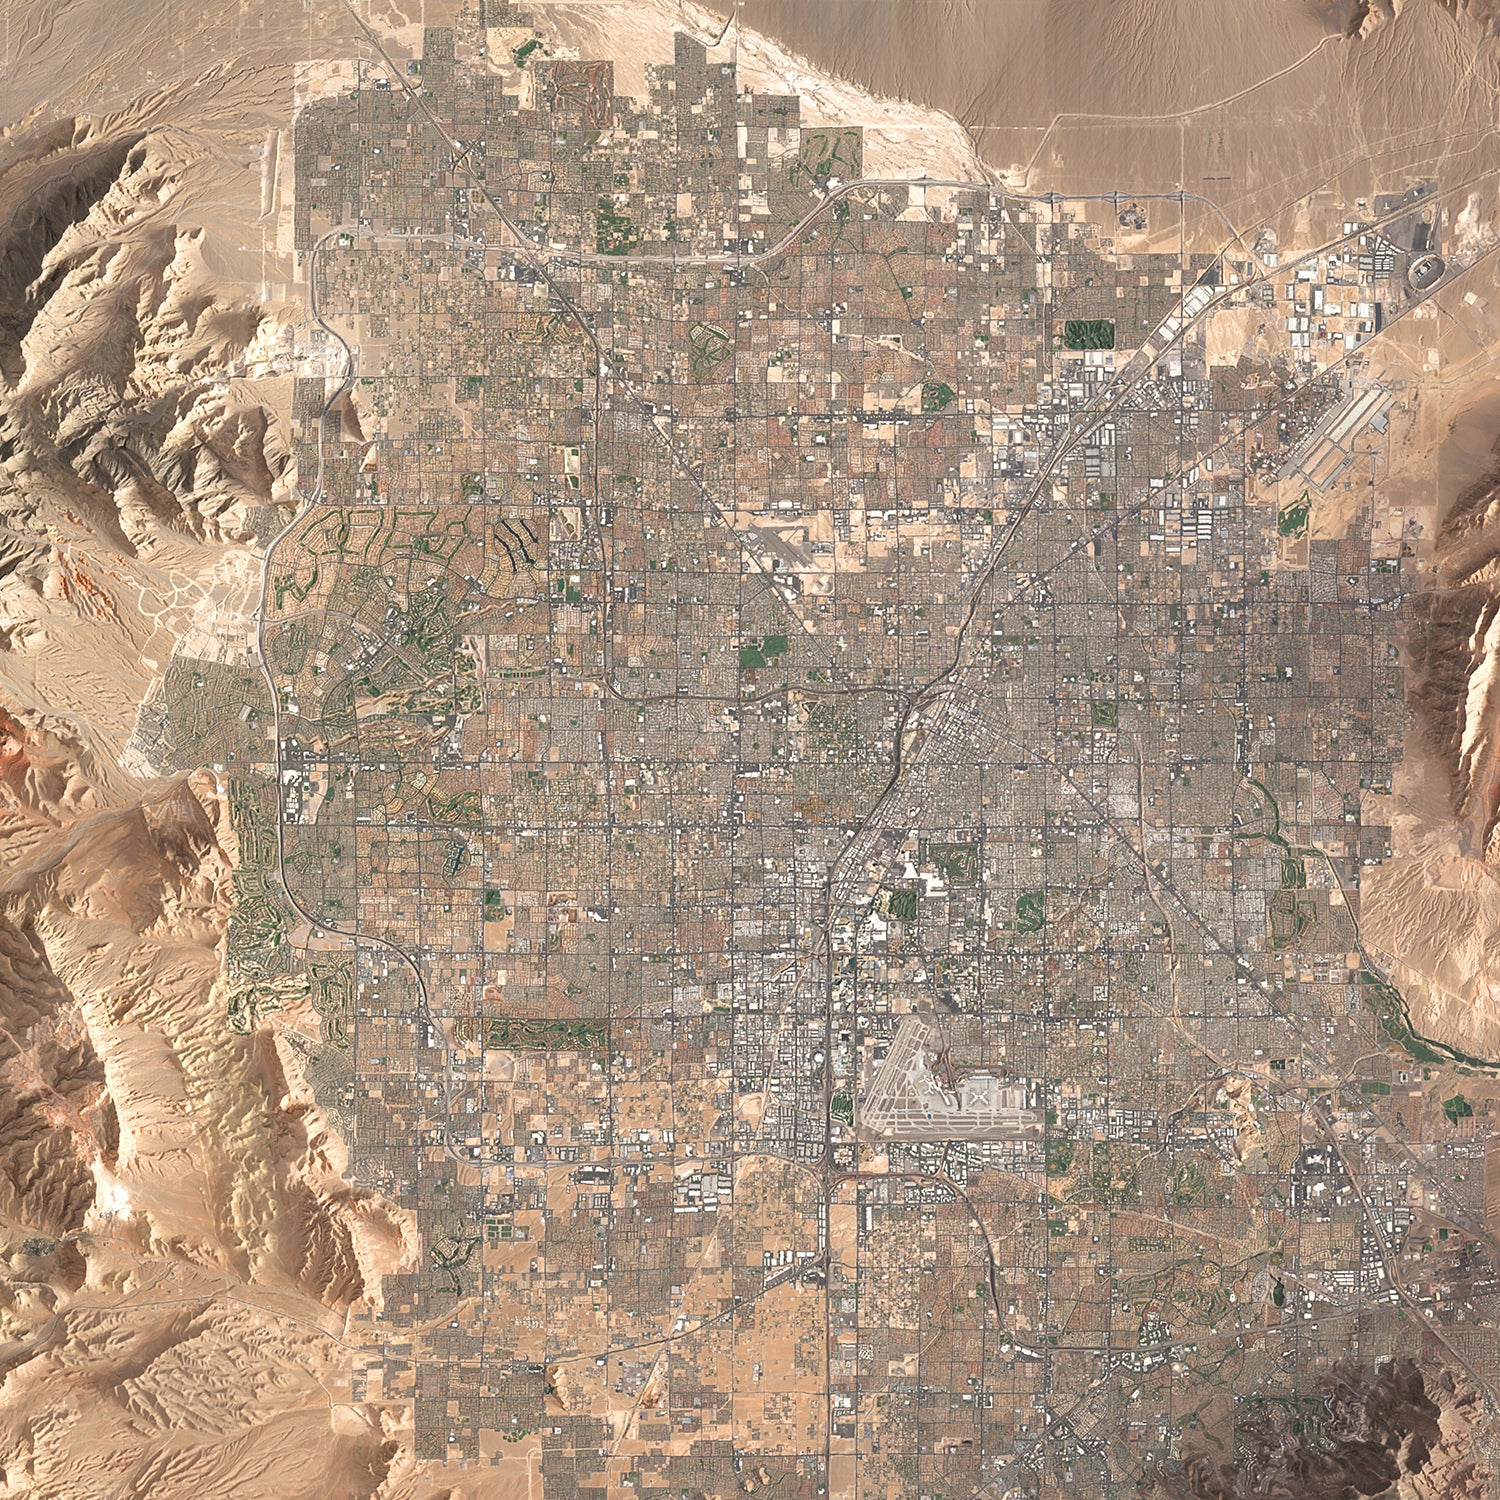 Las Vegas - Satellite Imagery